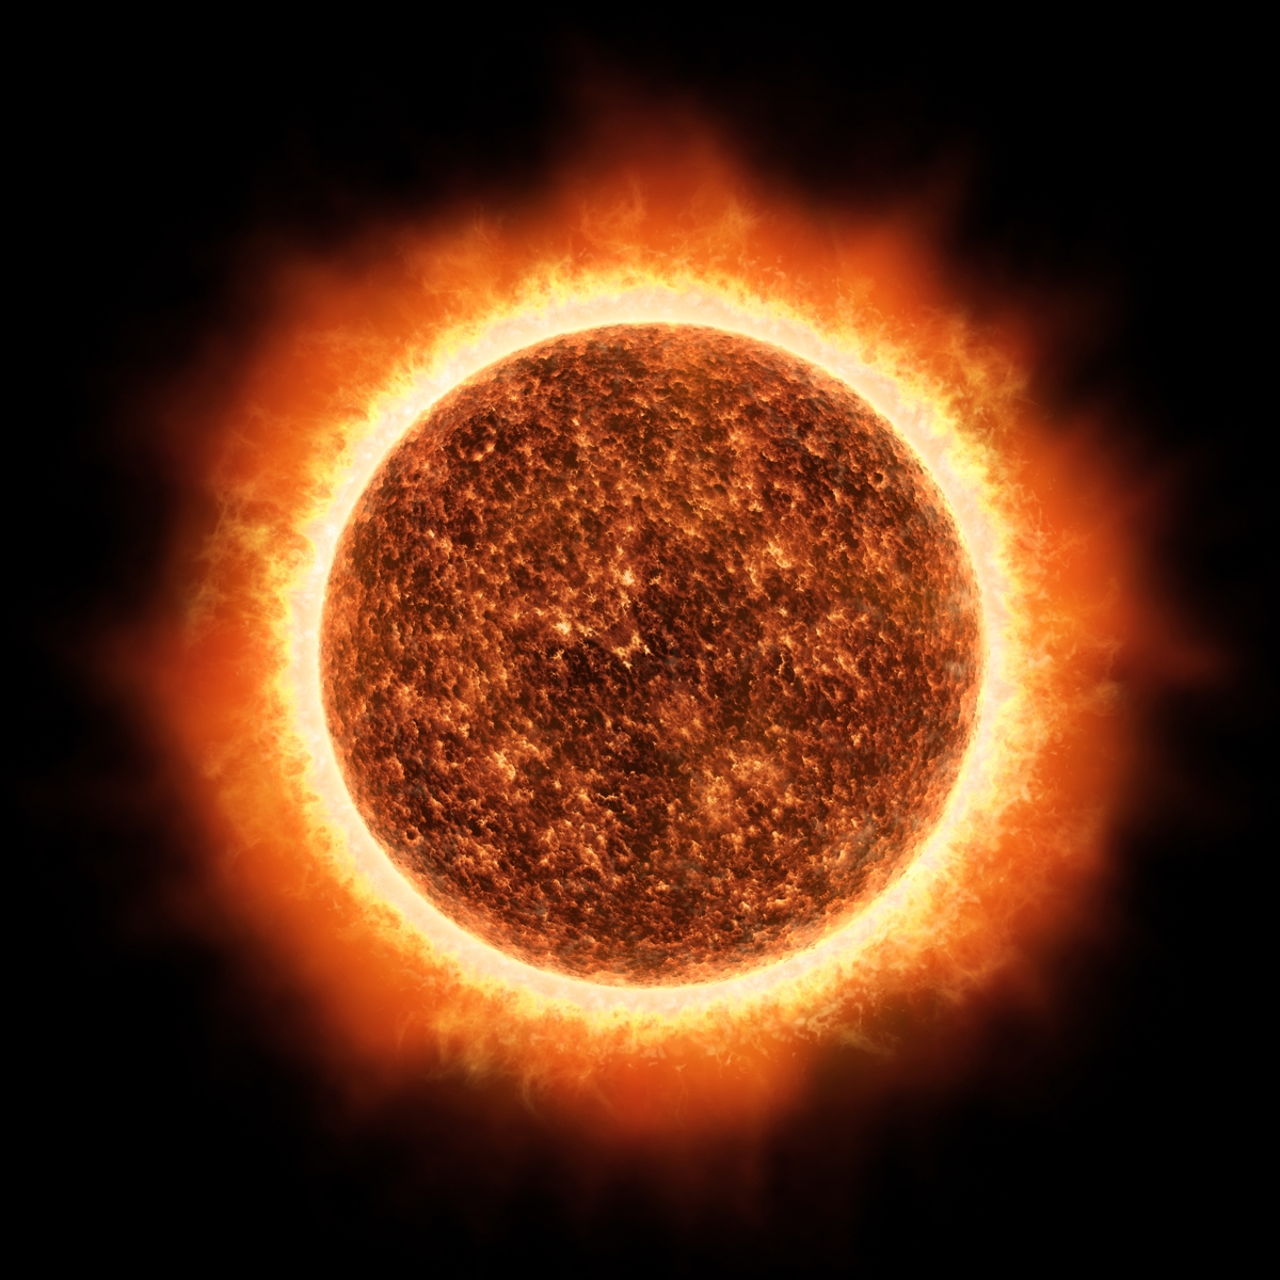 nuclear fusion sun